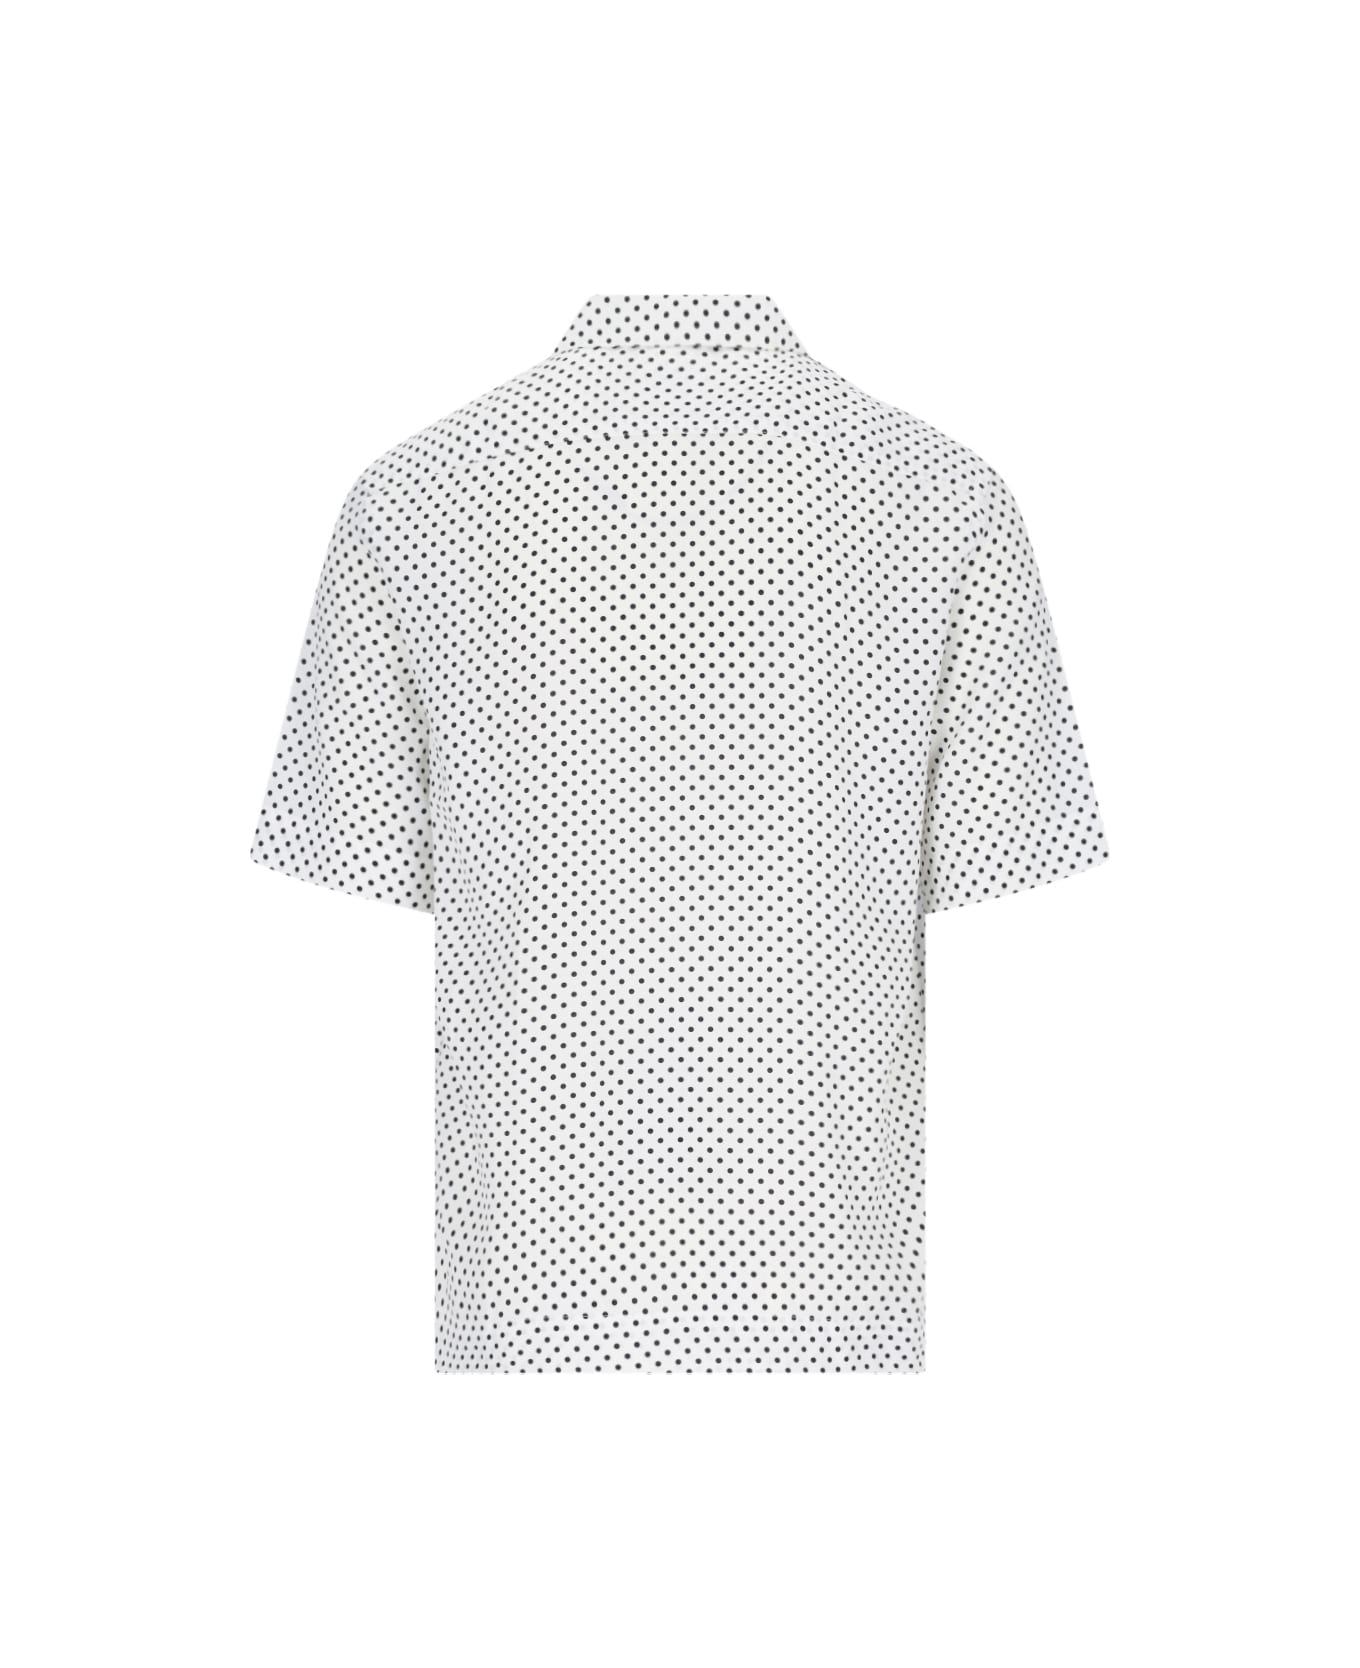 Paul Smith Polka Dot Shirt - White